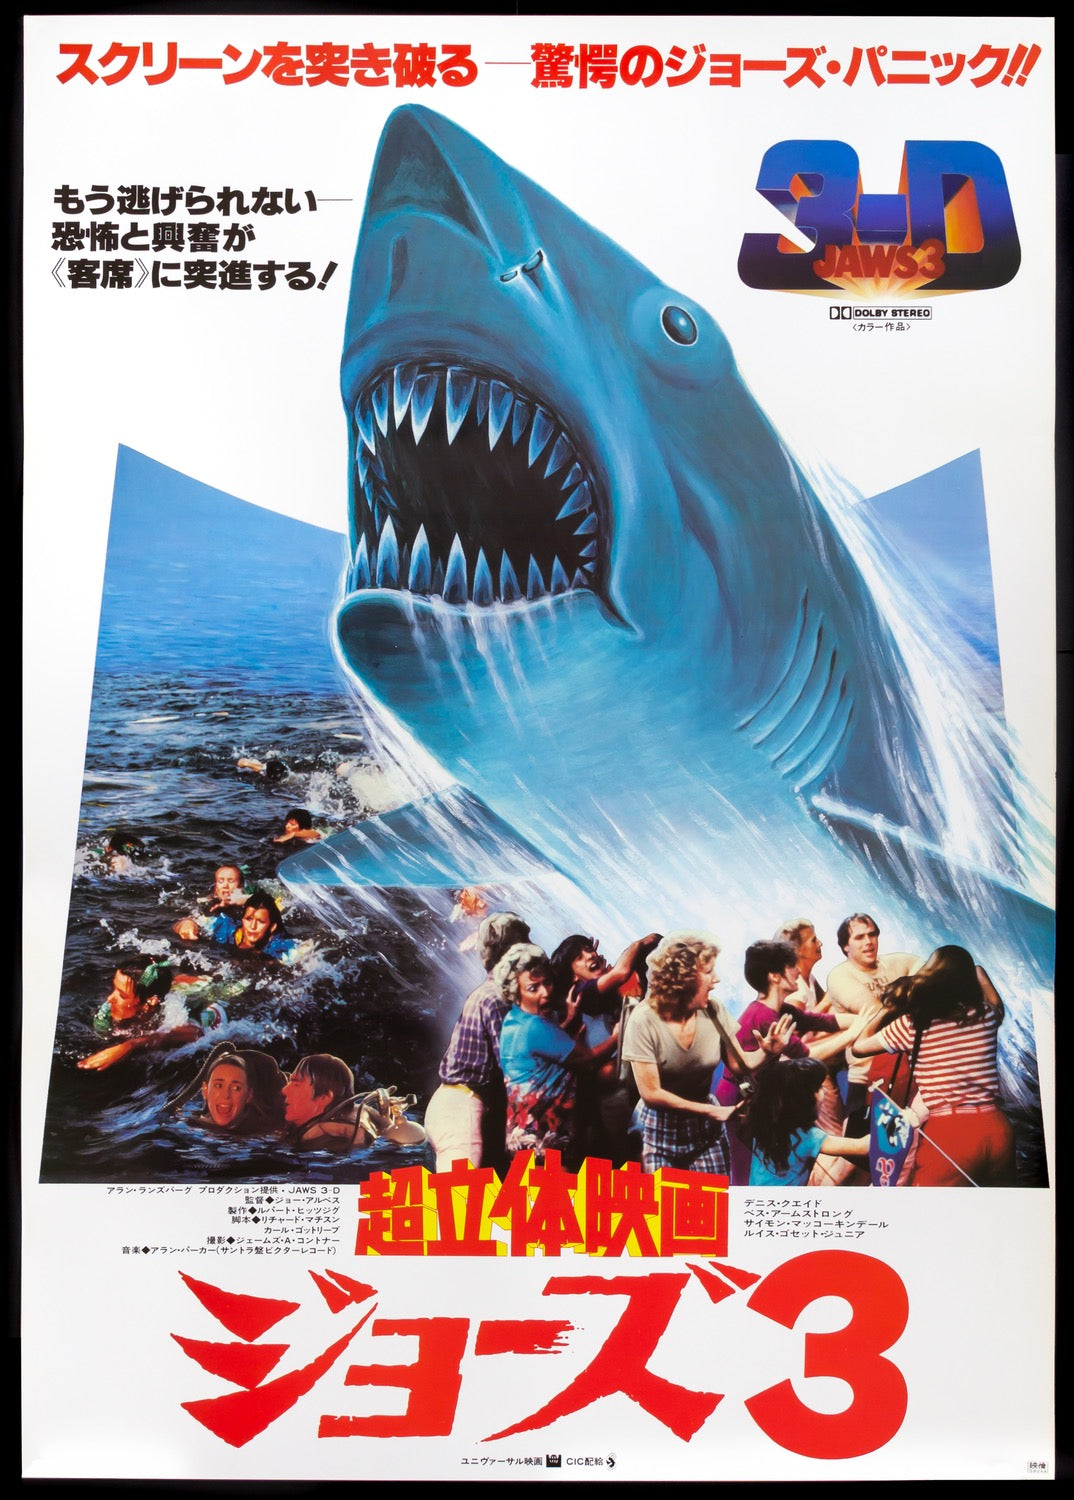 Jaws 3 (1983) original movie poster for sale at Original Film Art